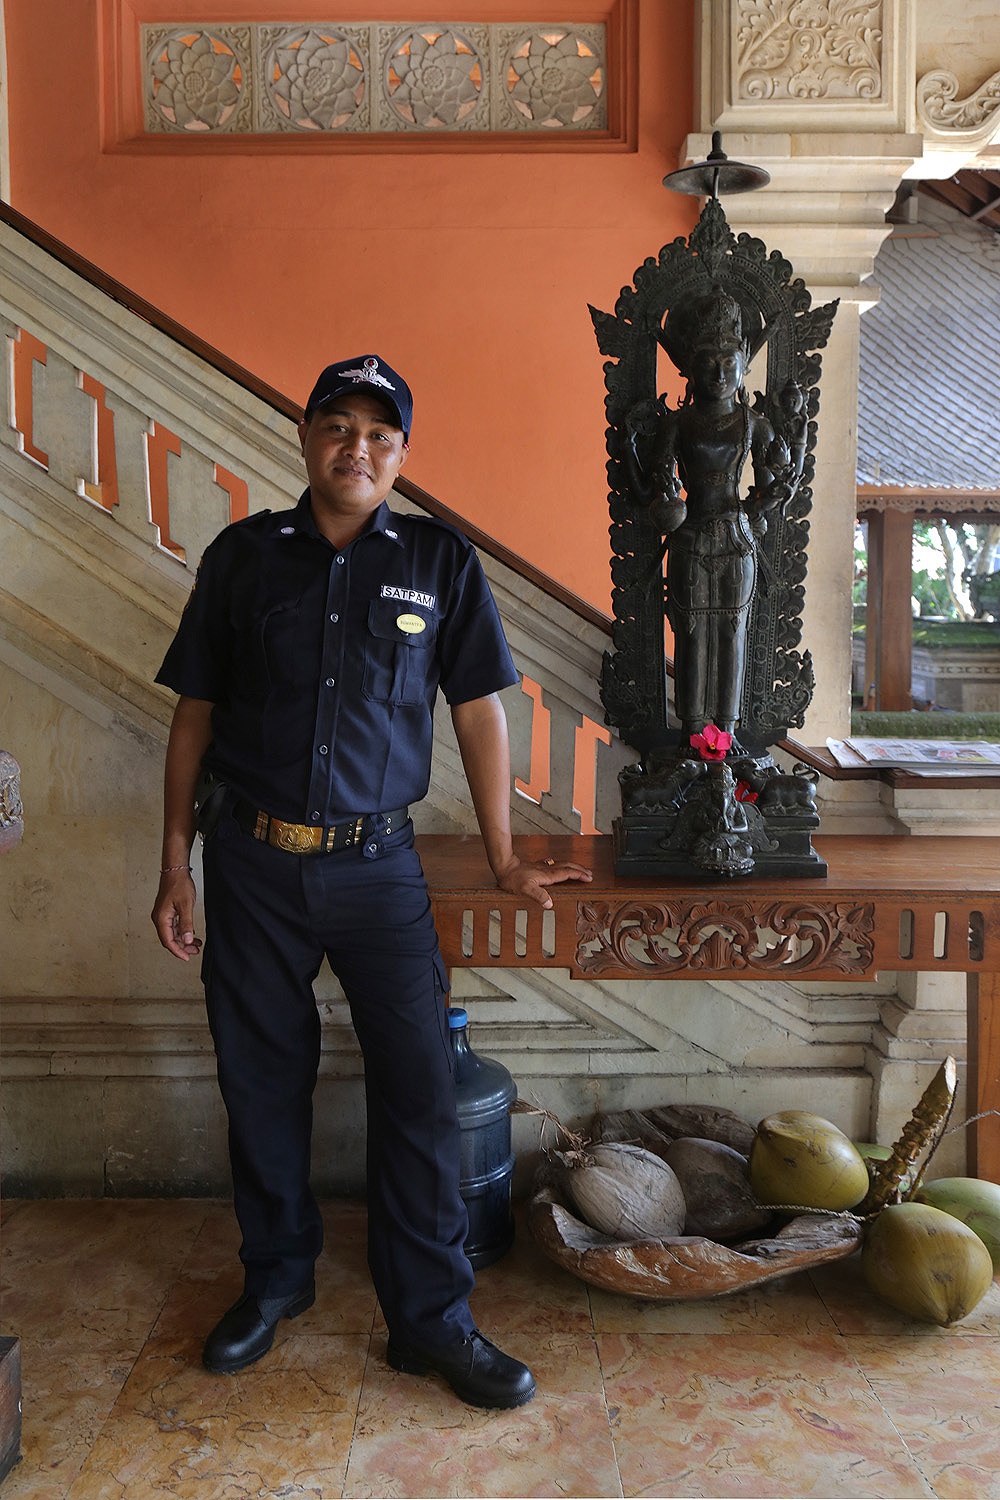 bill-hocker-hotel-guard-ubud-bali-indonesia-2016